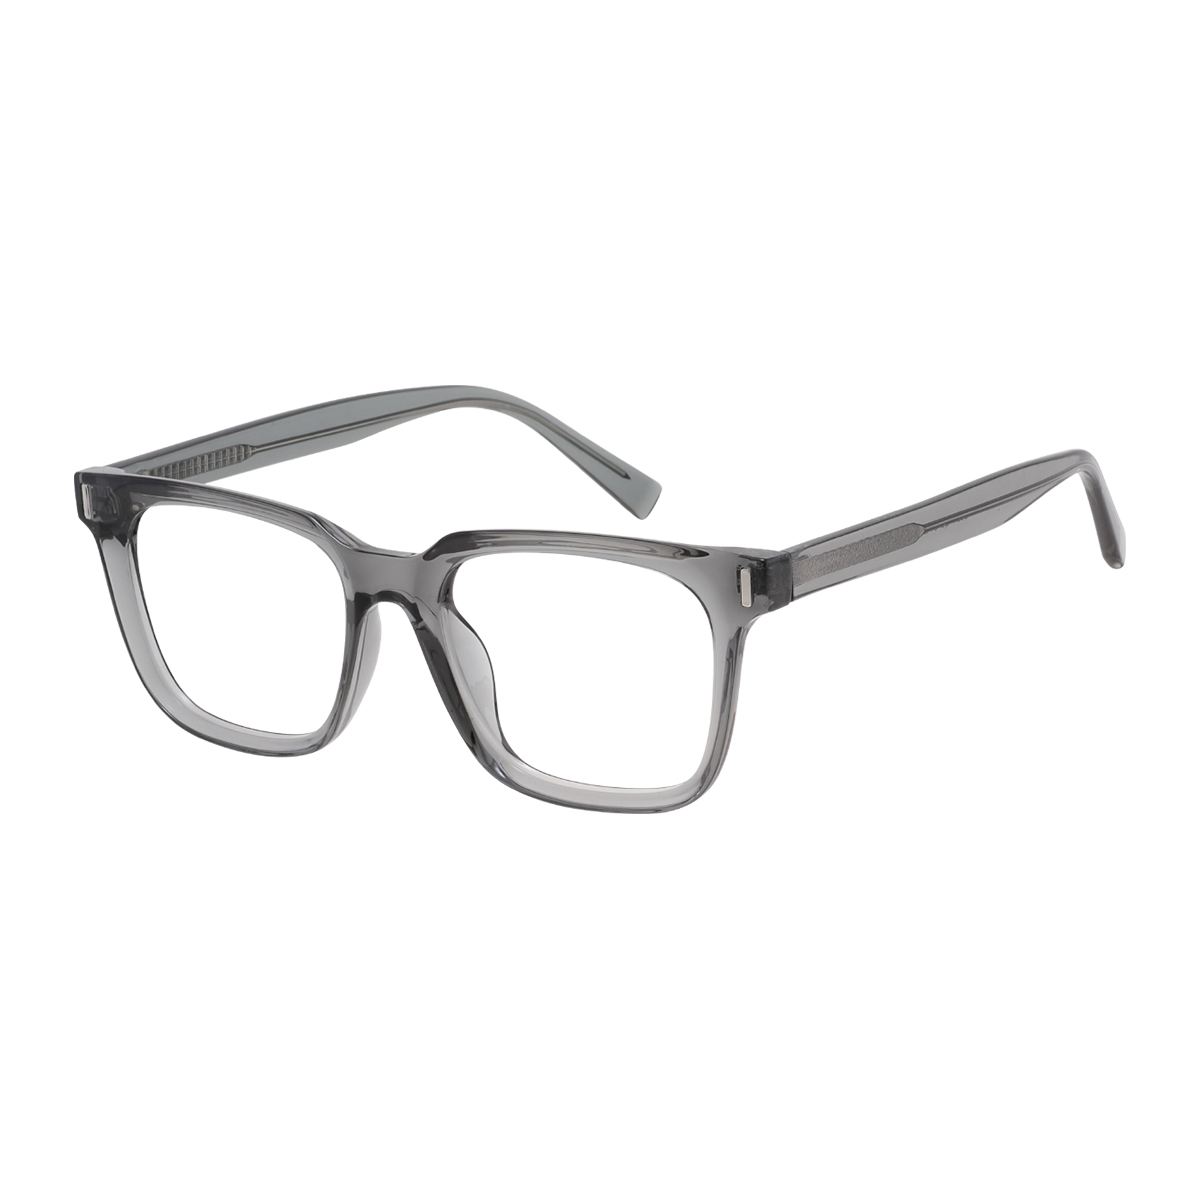 Clarice - Square Gray Reading Glasses for Men & Women